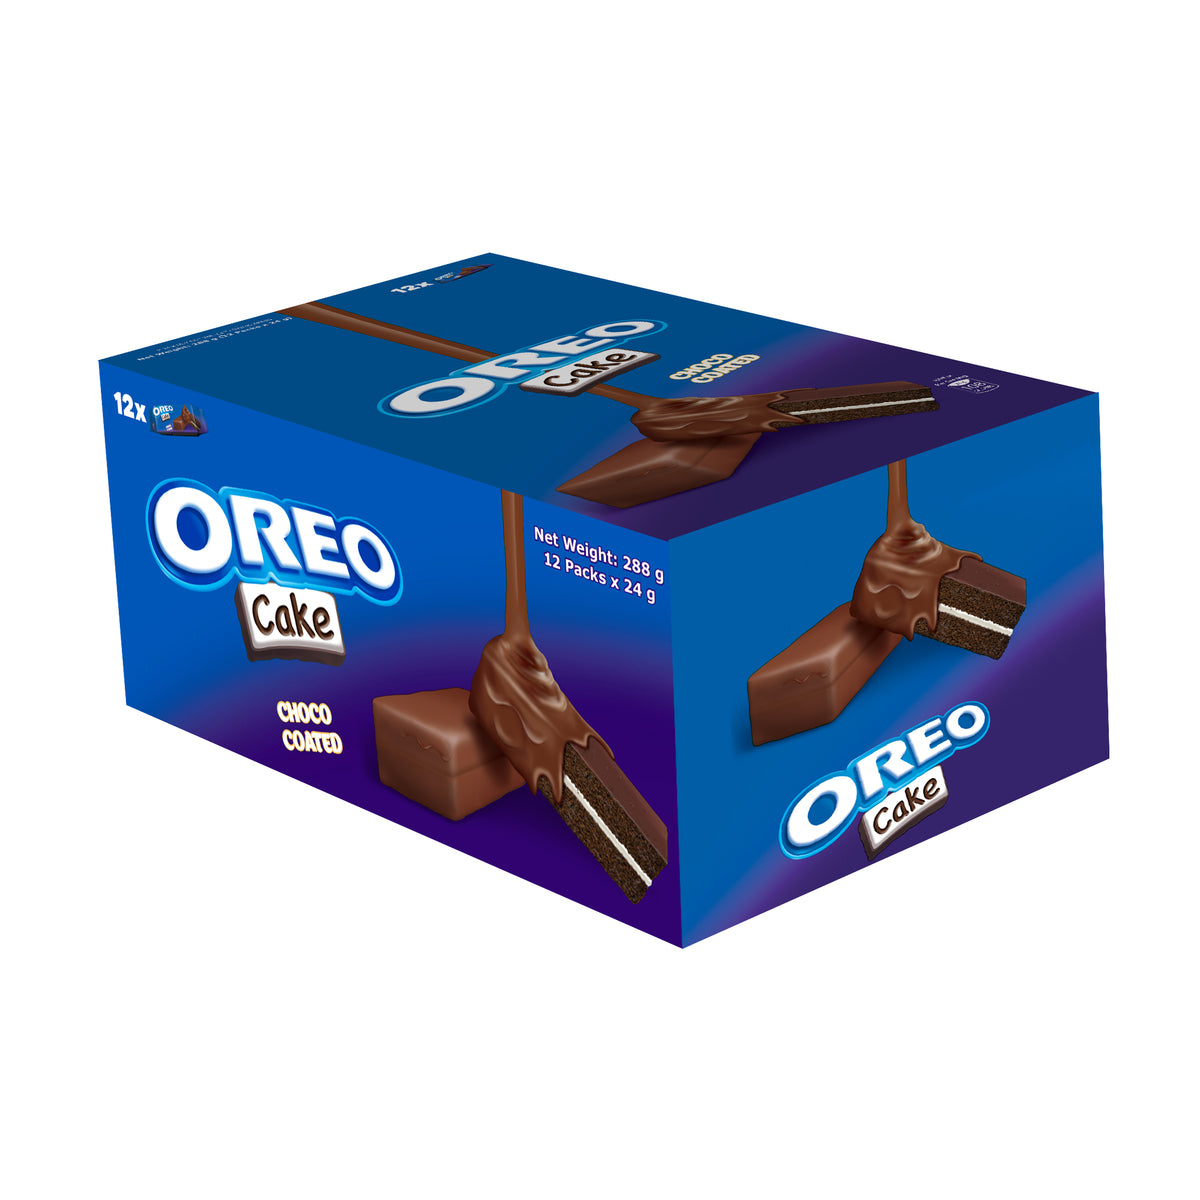 Oreo Cake Choco Coated (24g) (UAE) 12-Pack